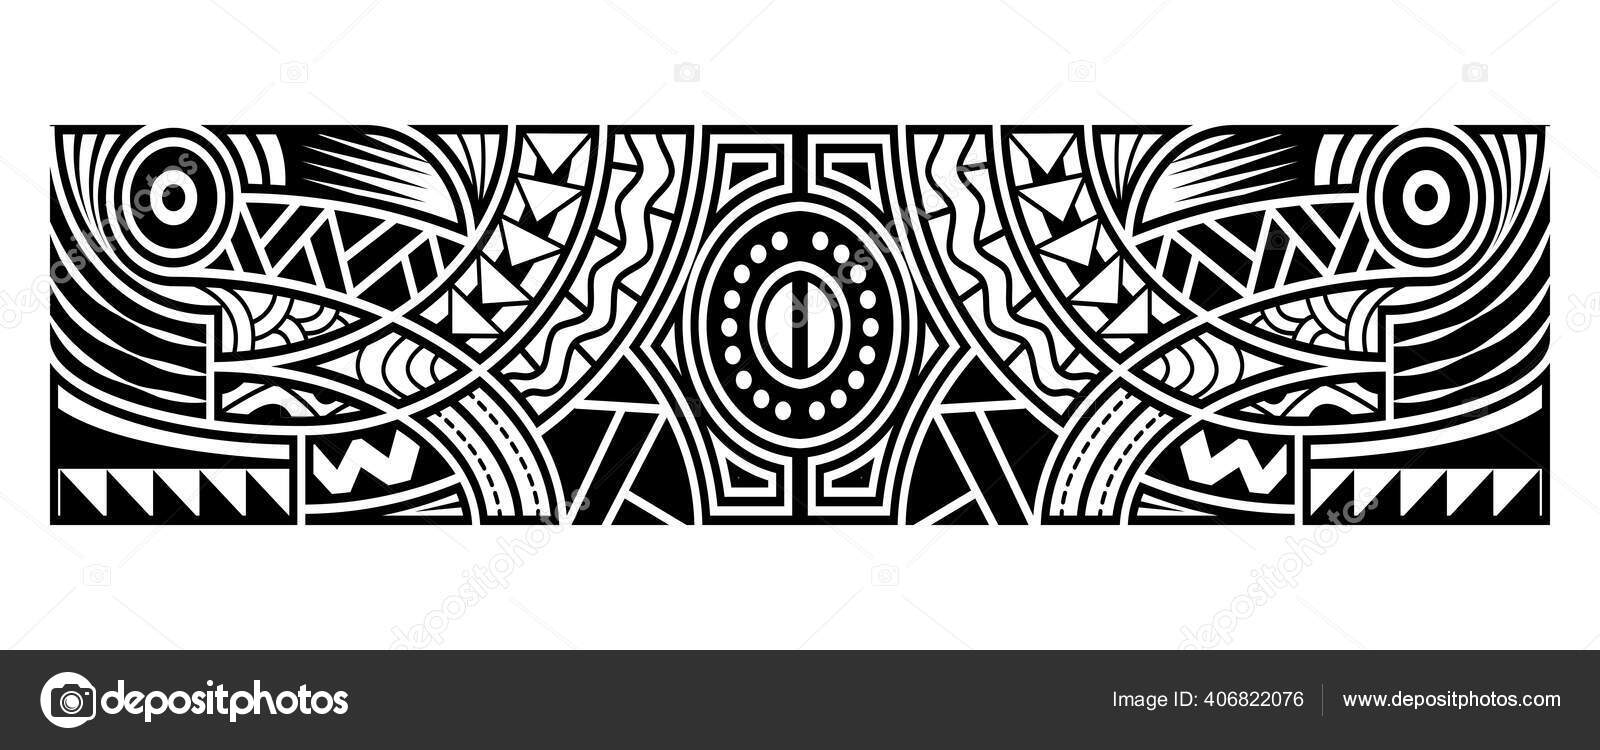 Circle Polynesian Tattoo Cliparts, Stock Vector and Royalty Free Circle Polynesian  Tattoo Illustrations